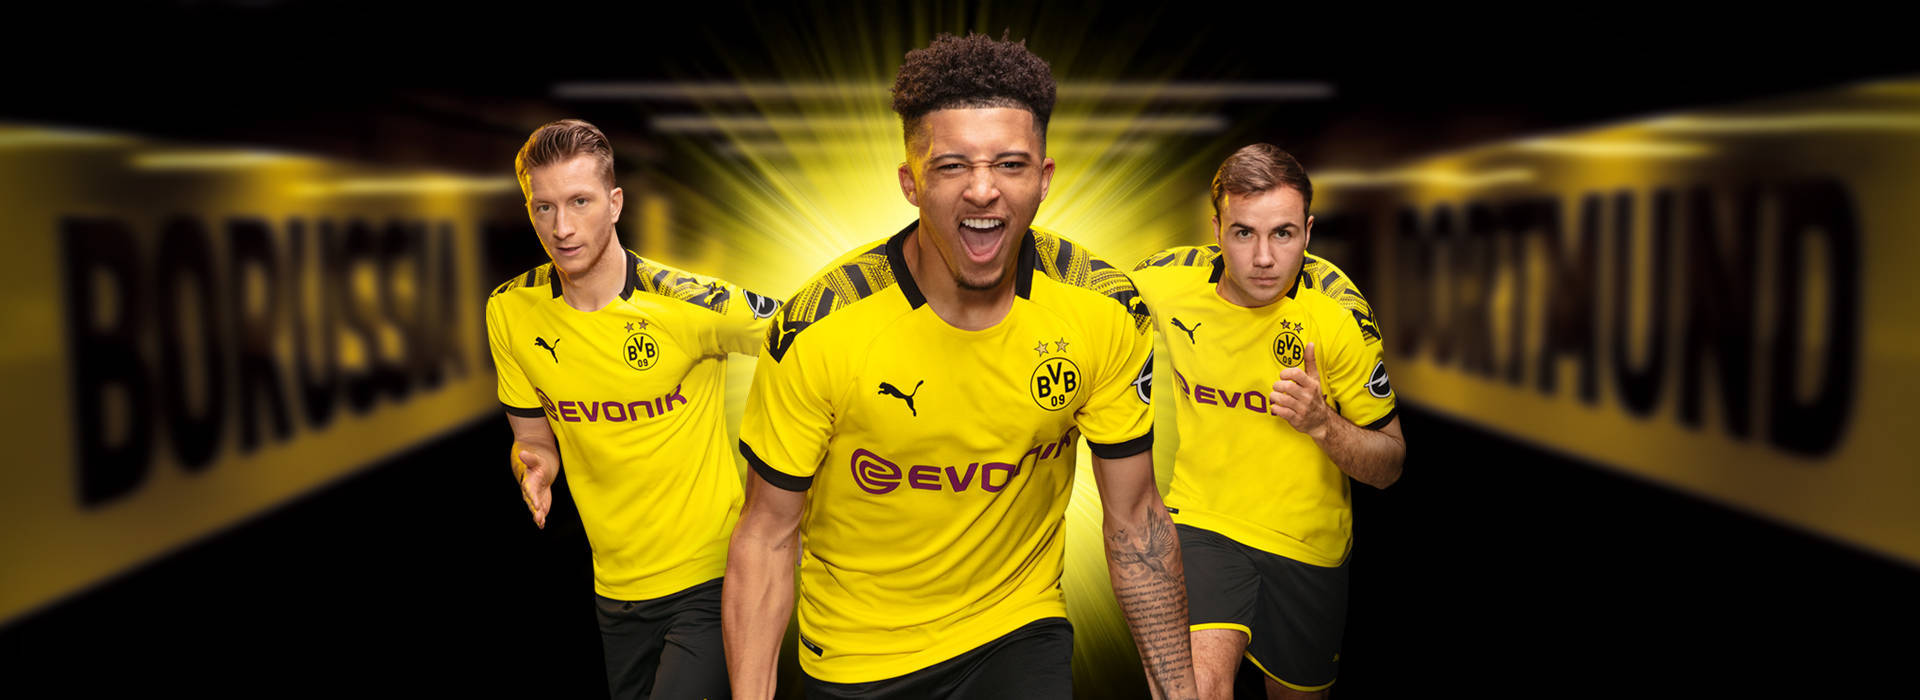 Dortmund 2019/20 PUMA Home Kit - FOOTBALL FASHION